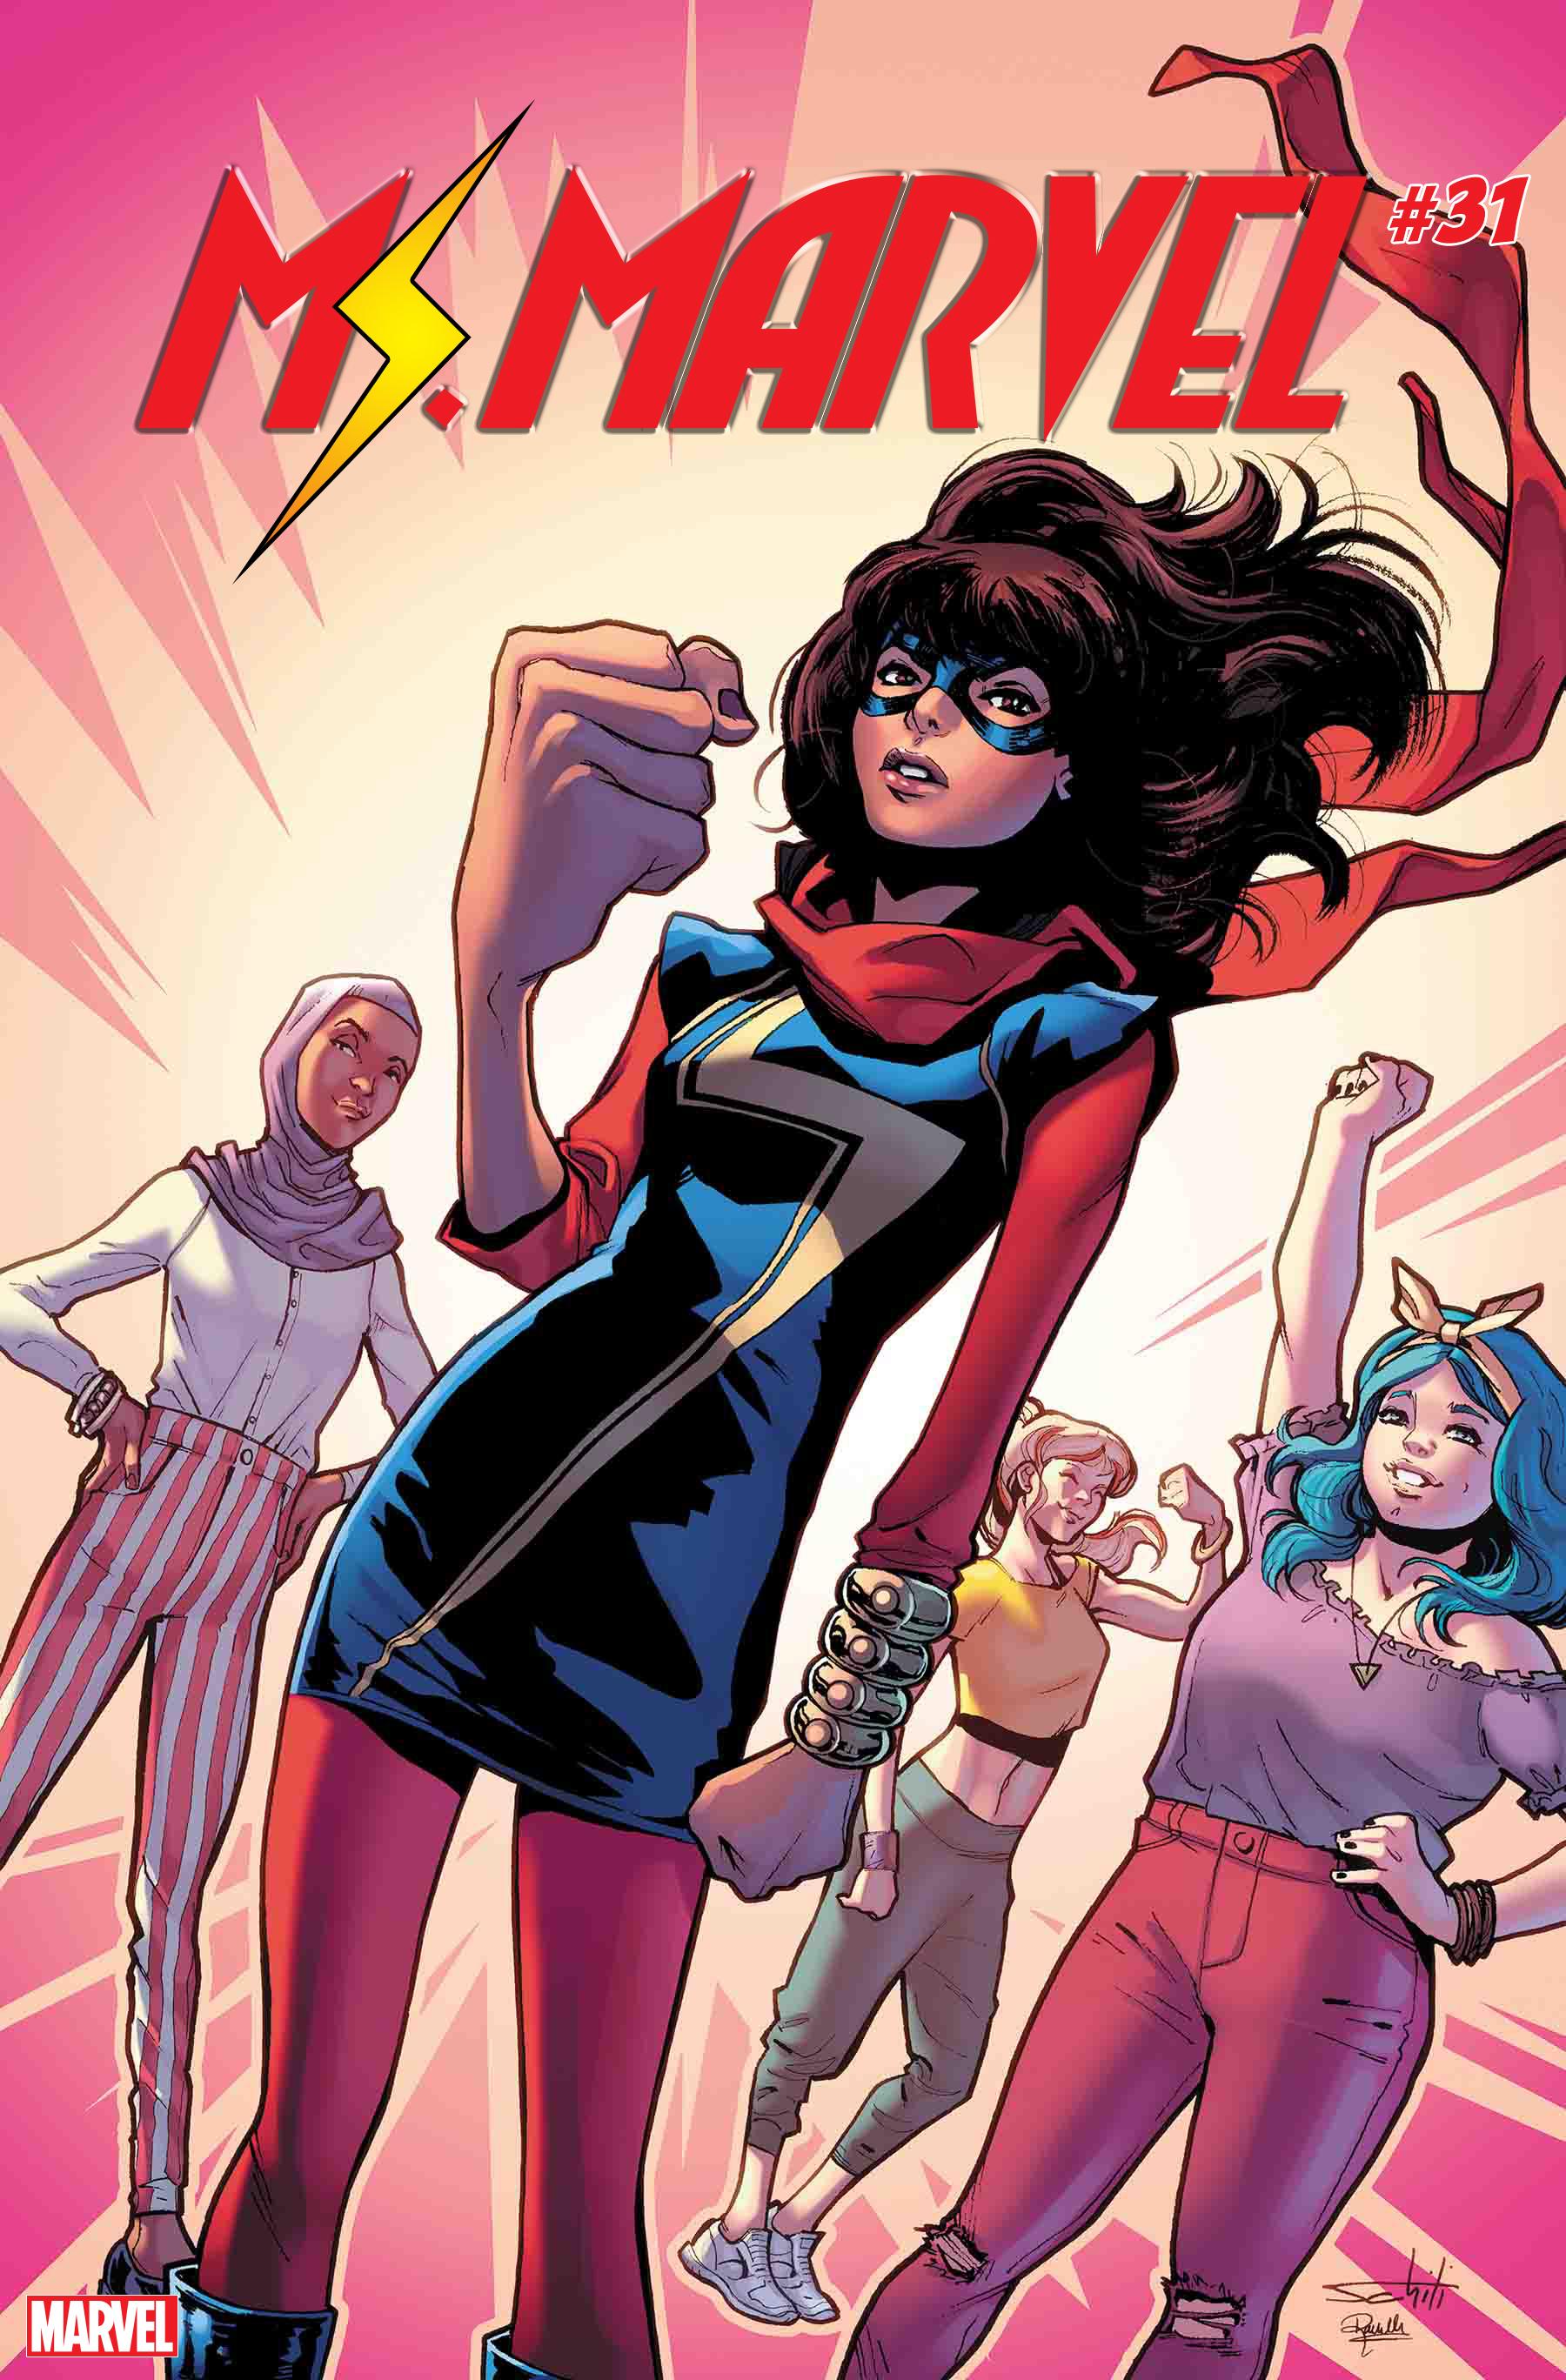 Ms. Marvel Vol. 4 #31